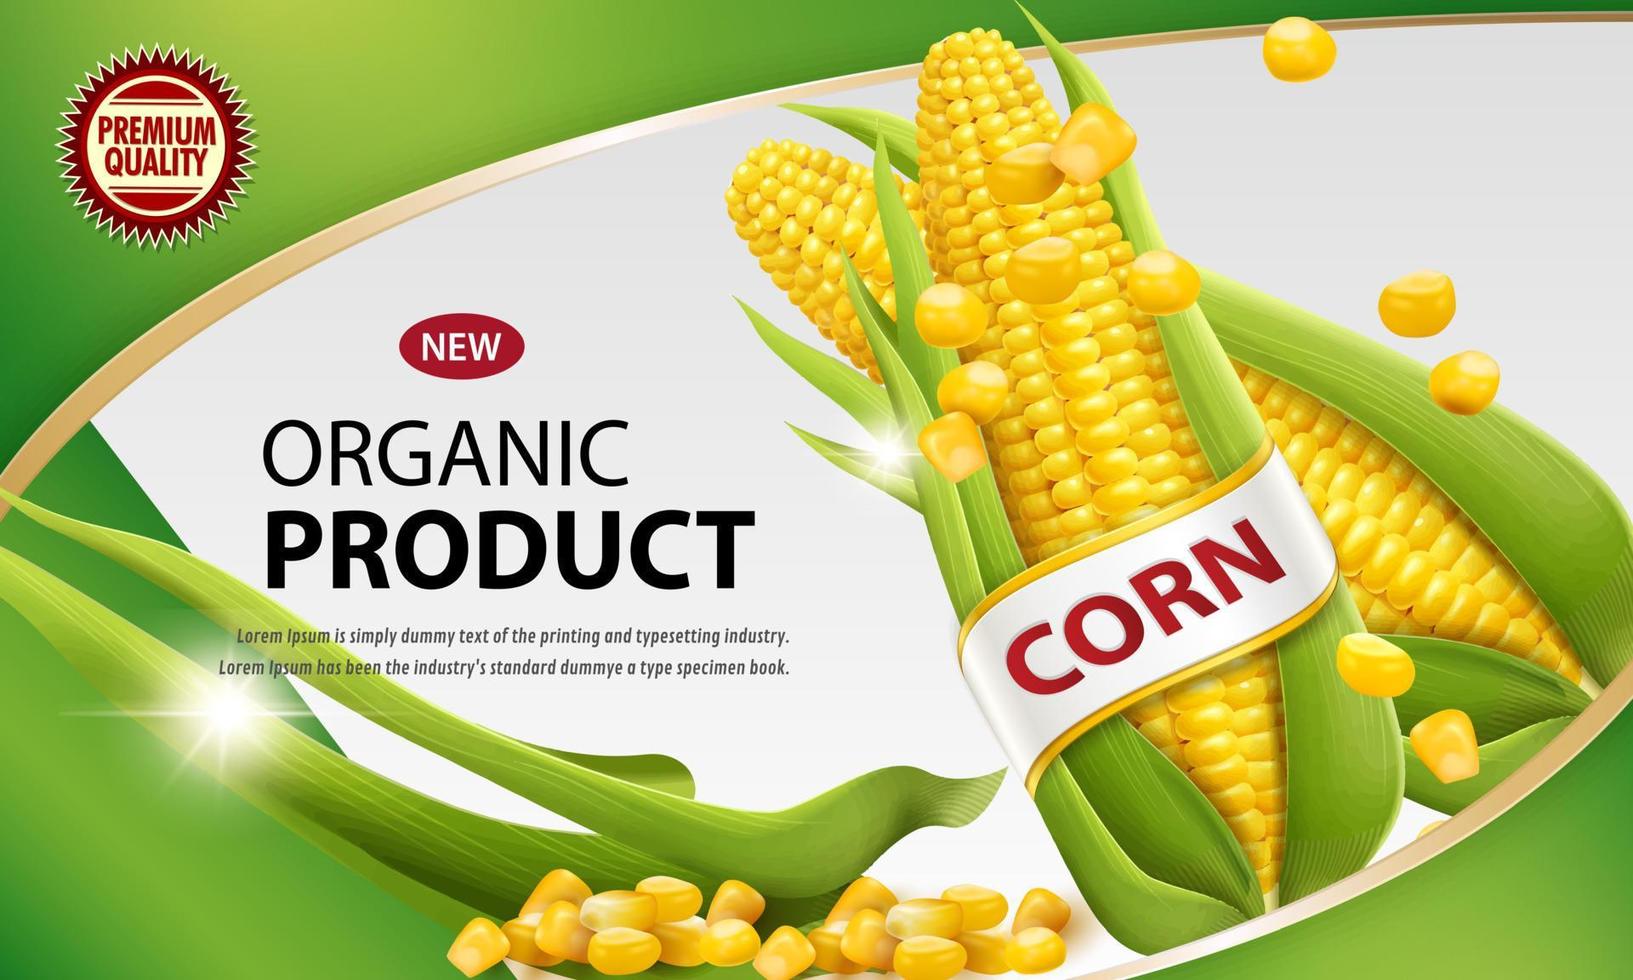 Verpackungsetiketten für Maisprodukte. plakat, broschüre, lebensmittelproduktdesign vektor